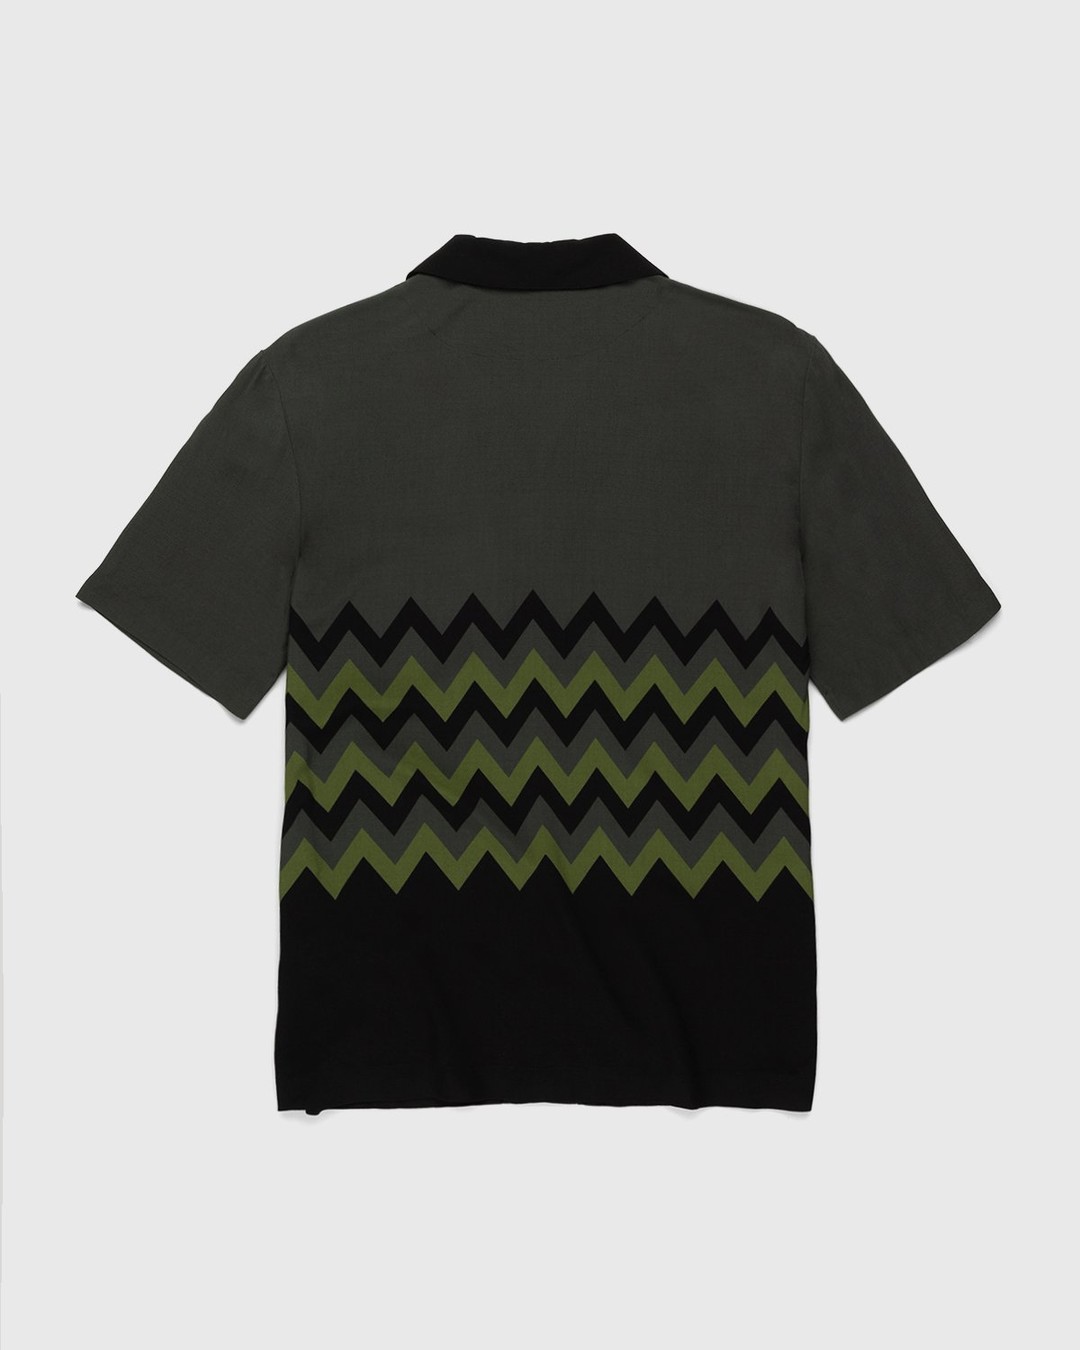 Missoni – Zig Zag Camp Shirt Green - T-shirts - Multi - Image 2